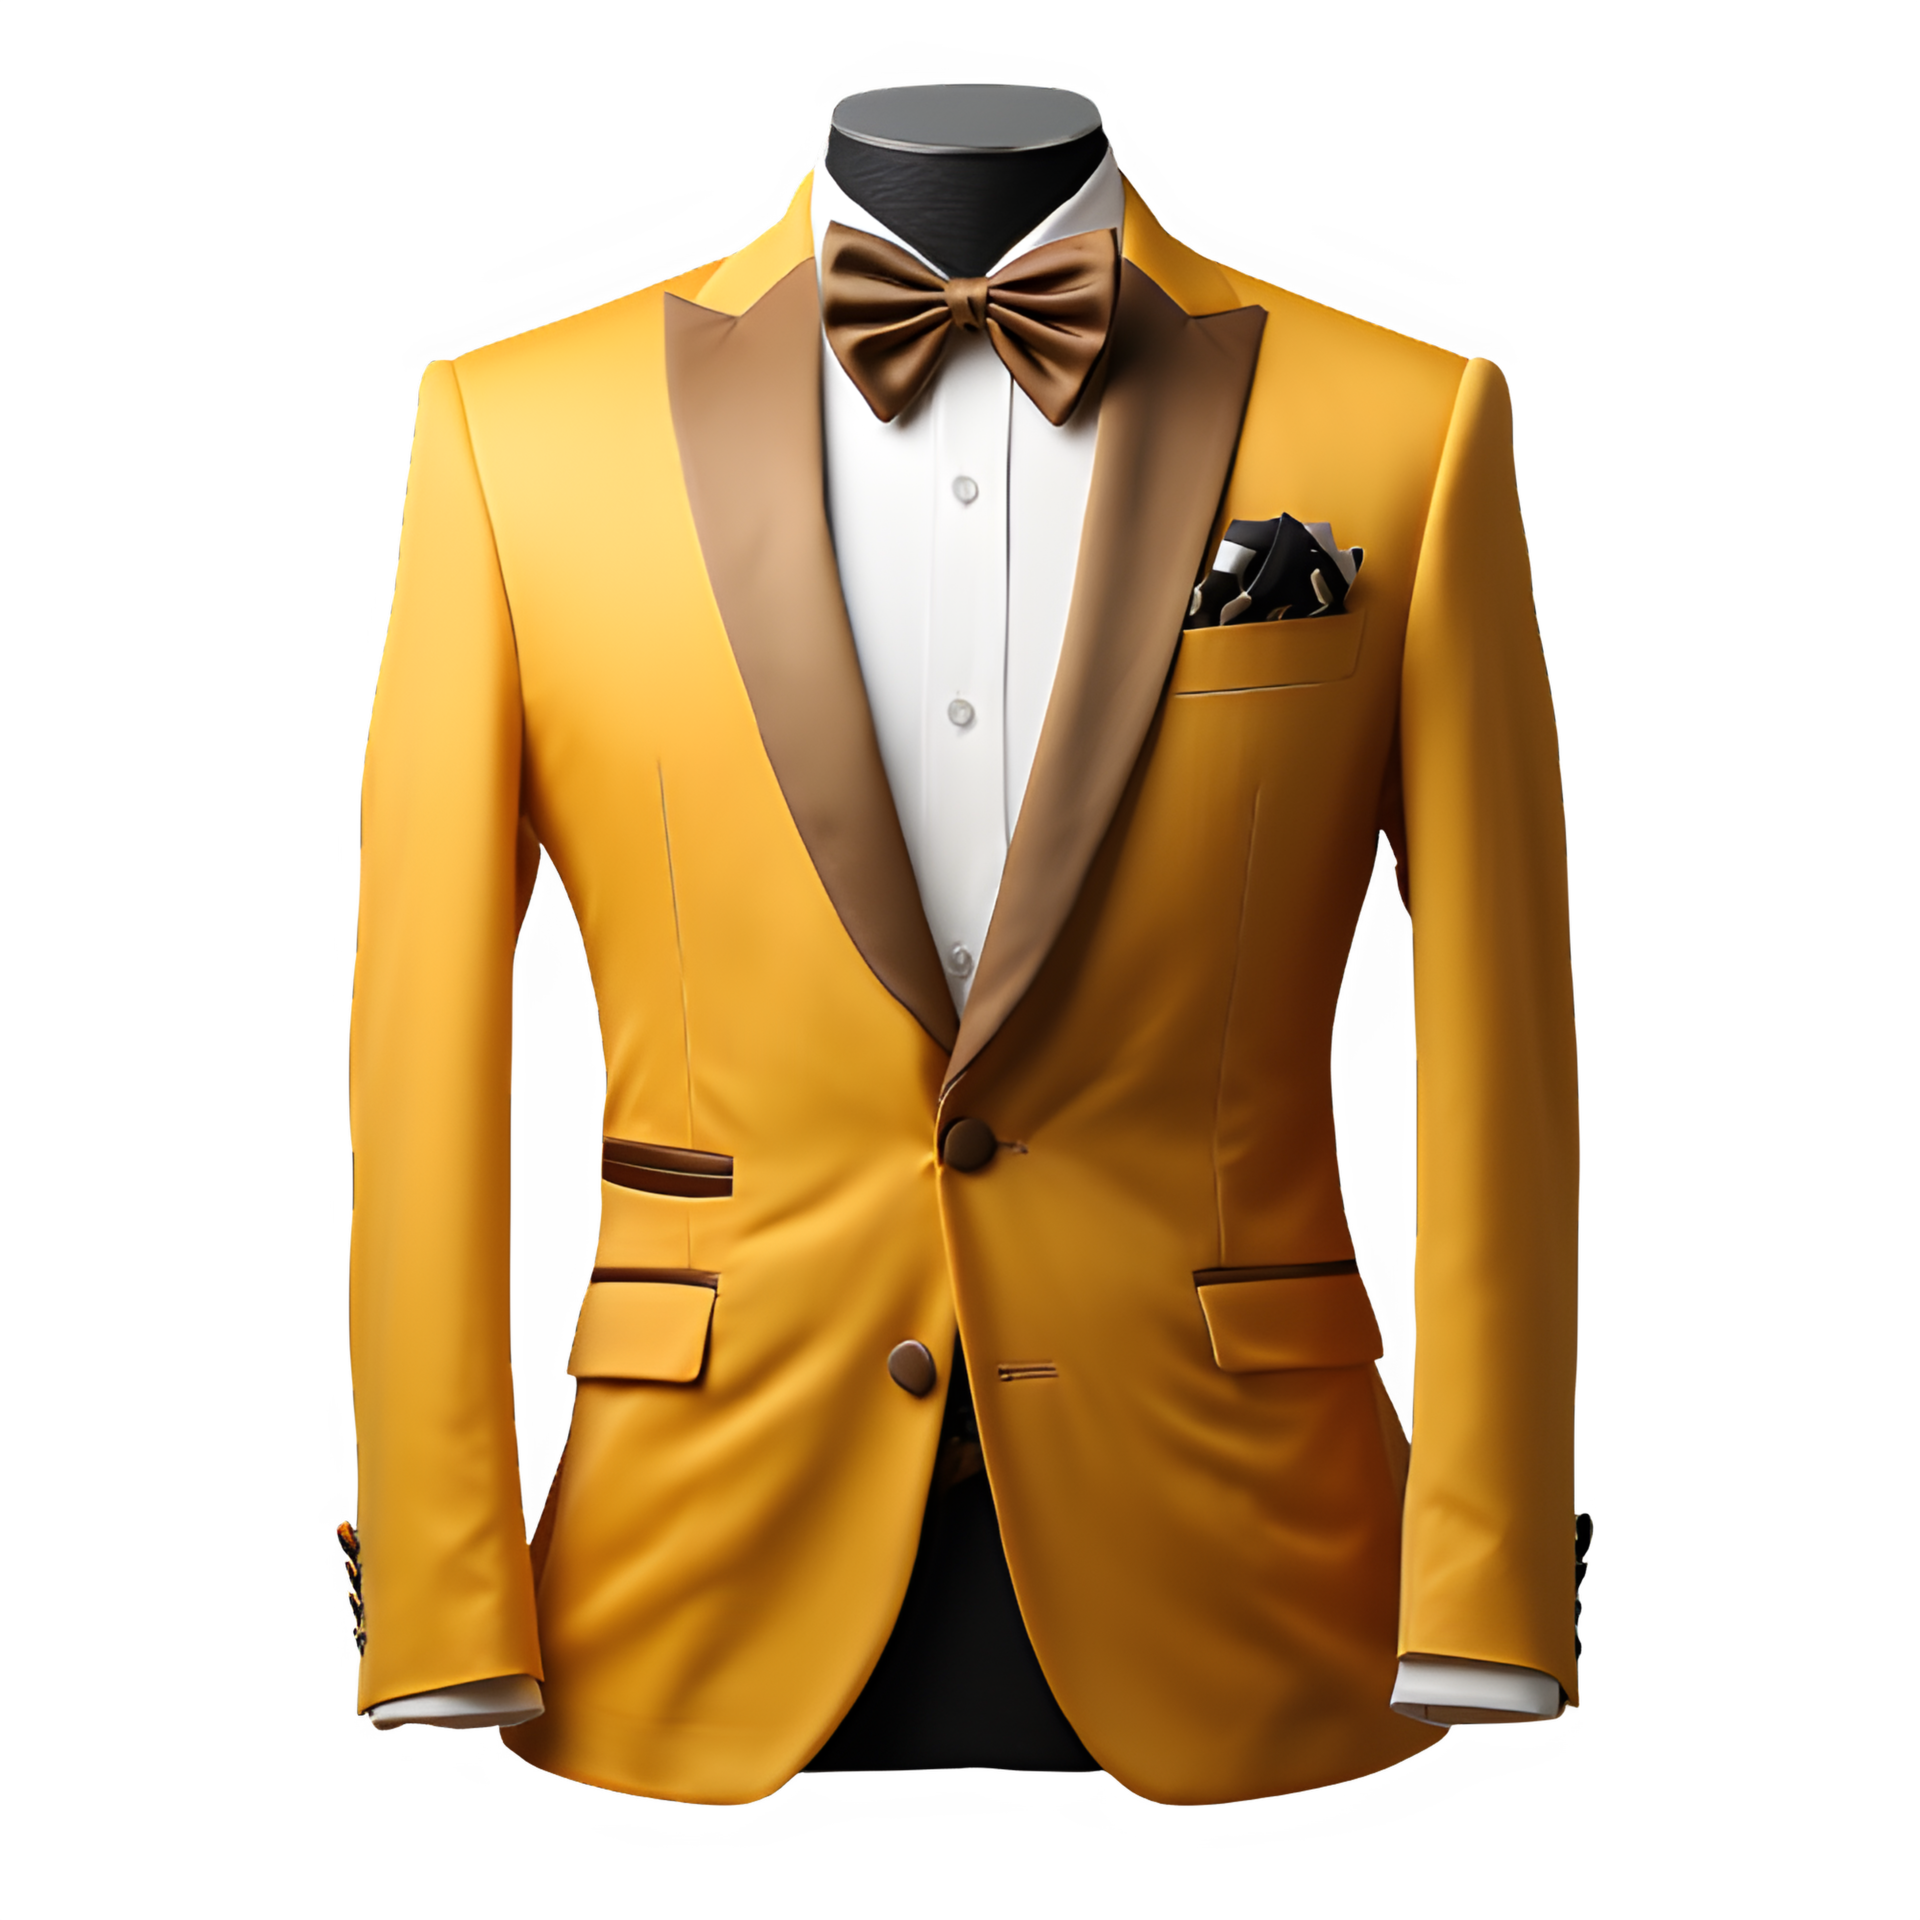 yellow tuxedo suit mockup on transparent background ,businessman suit ...